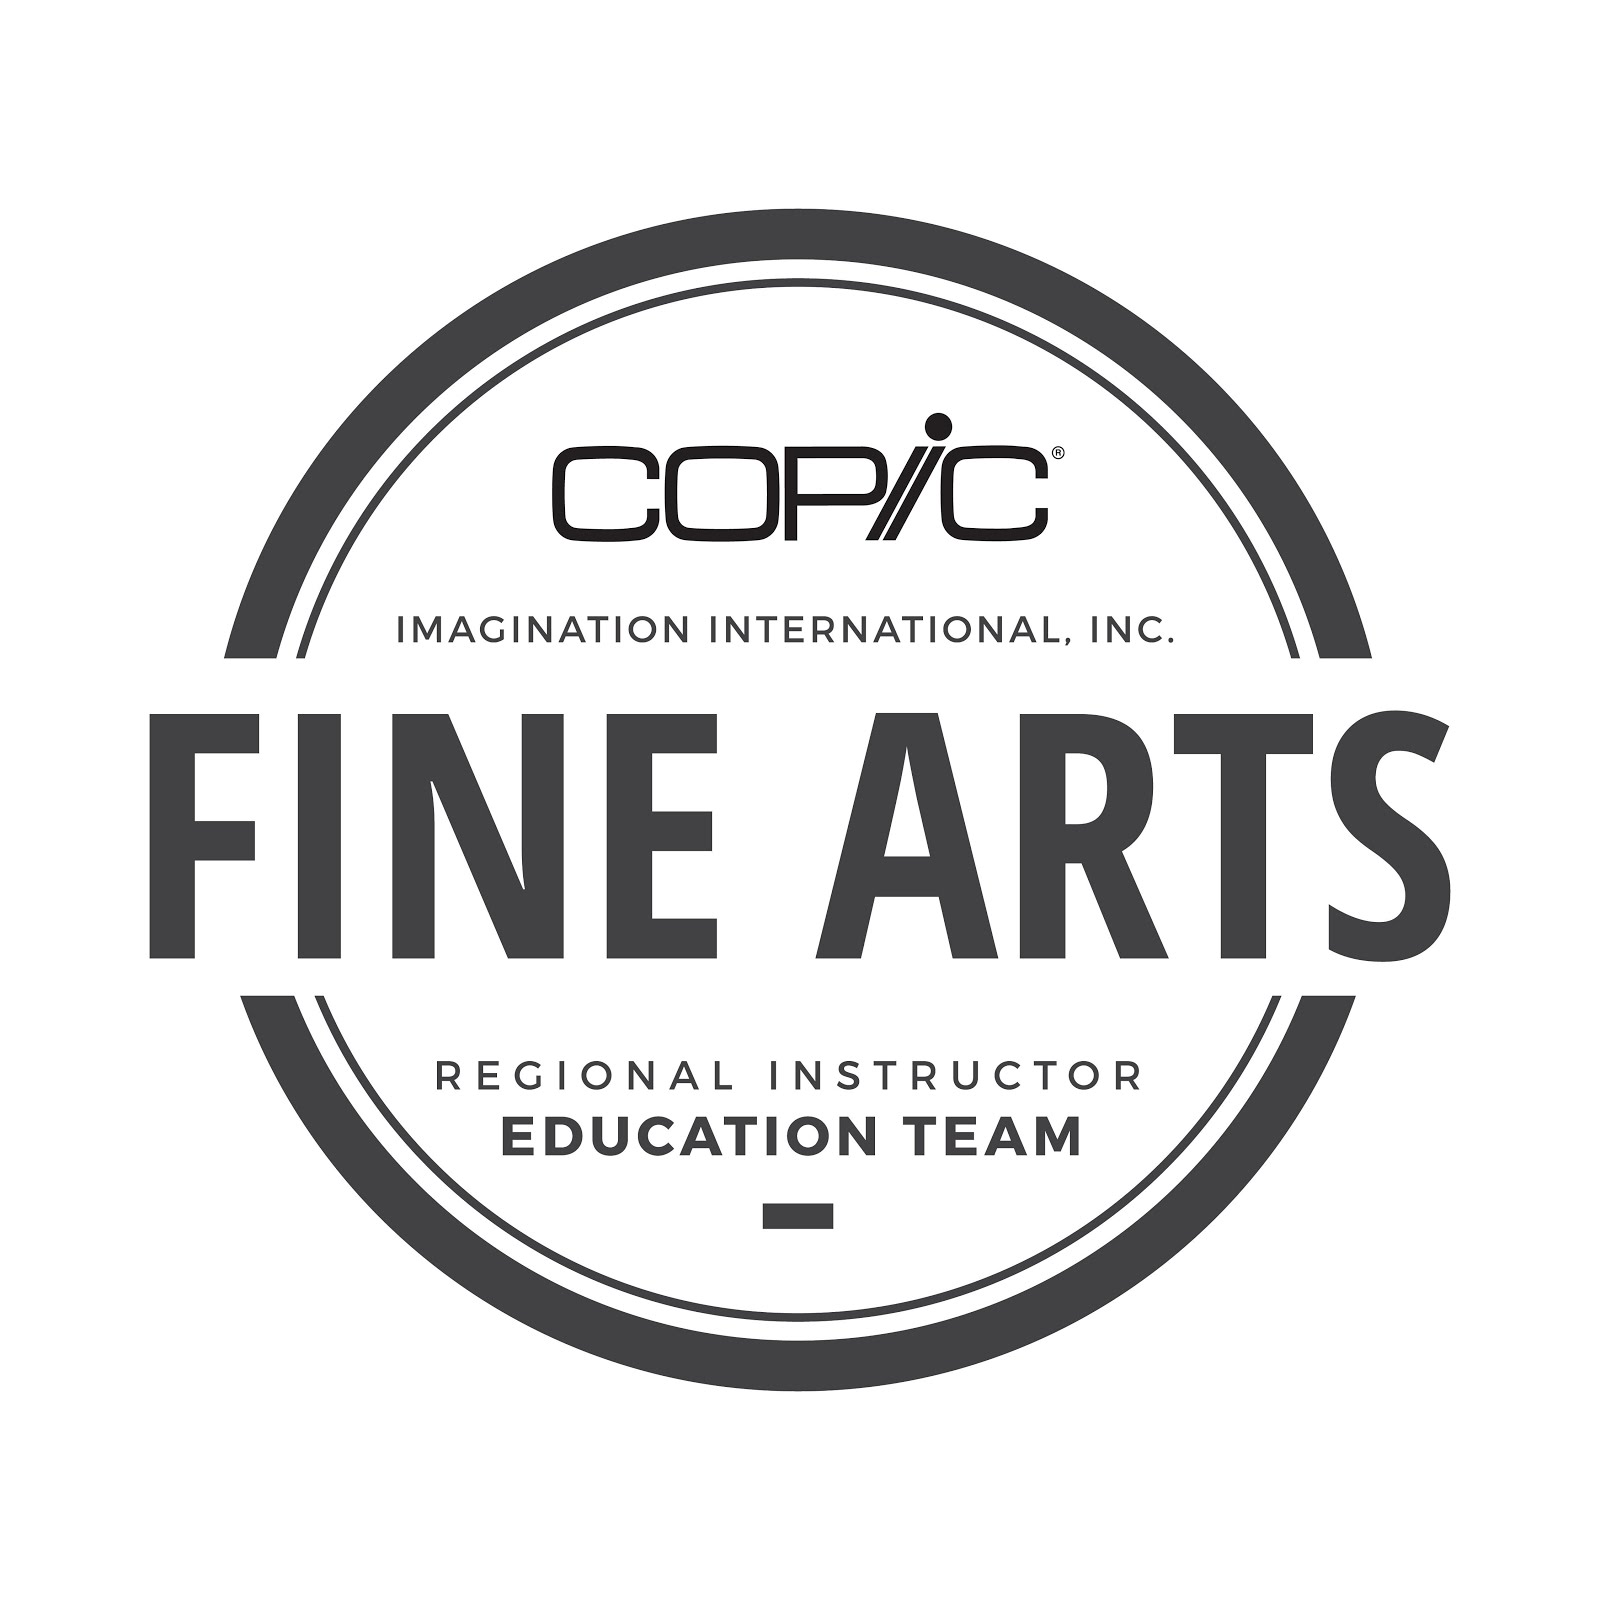 Copic Fine Arts Team